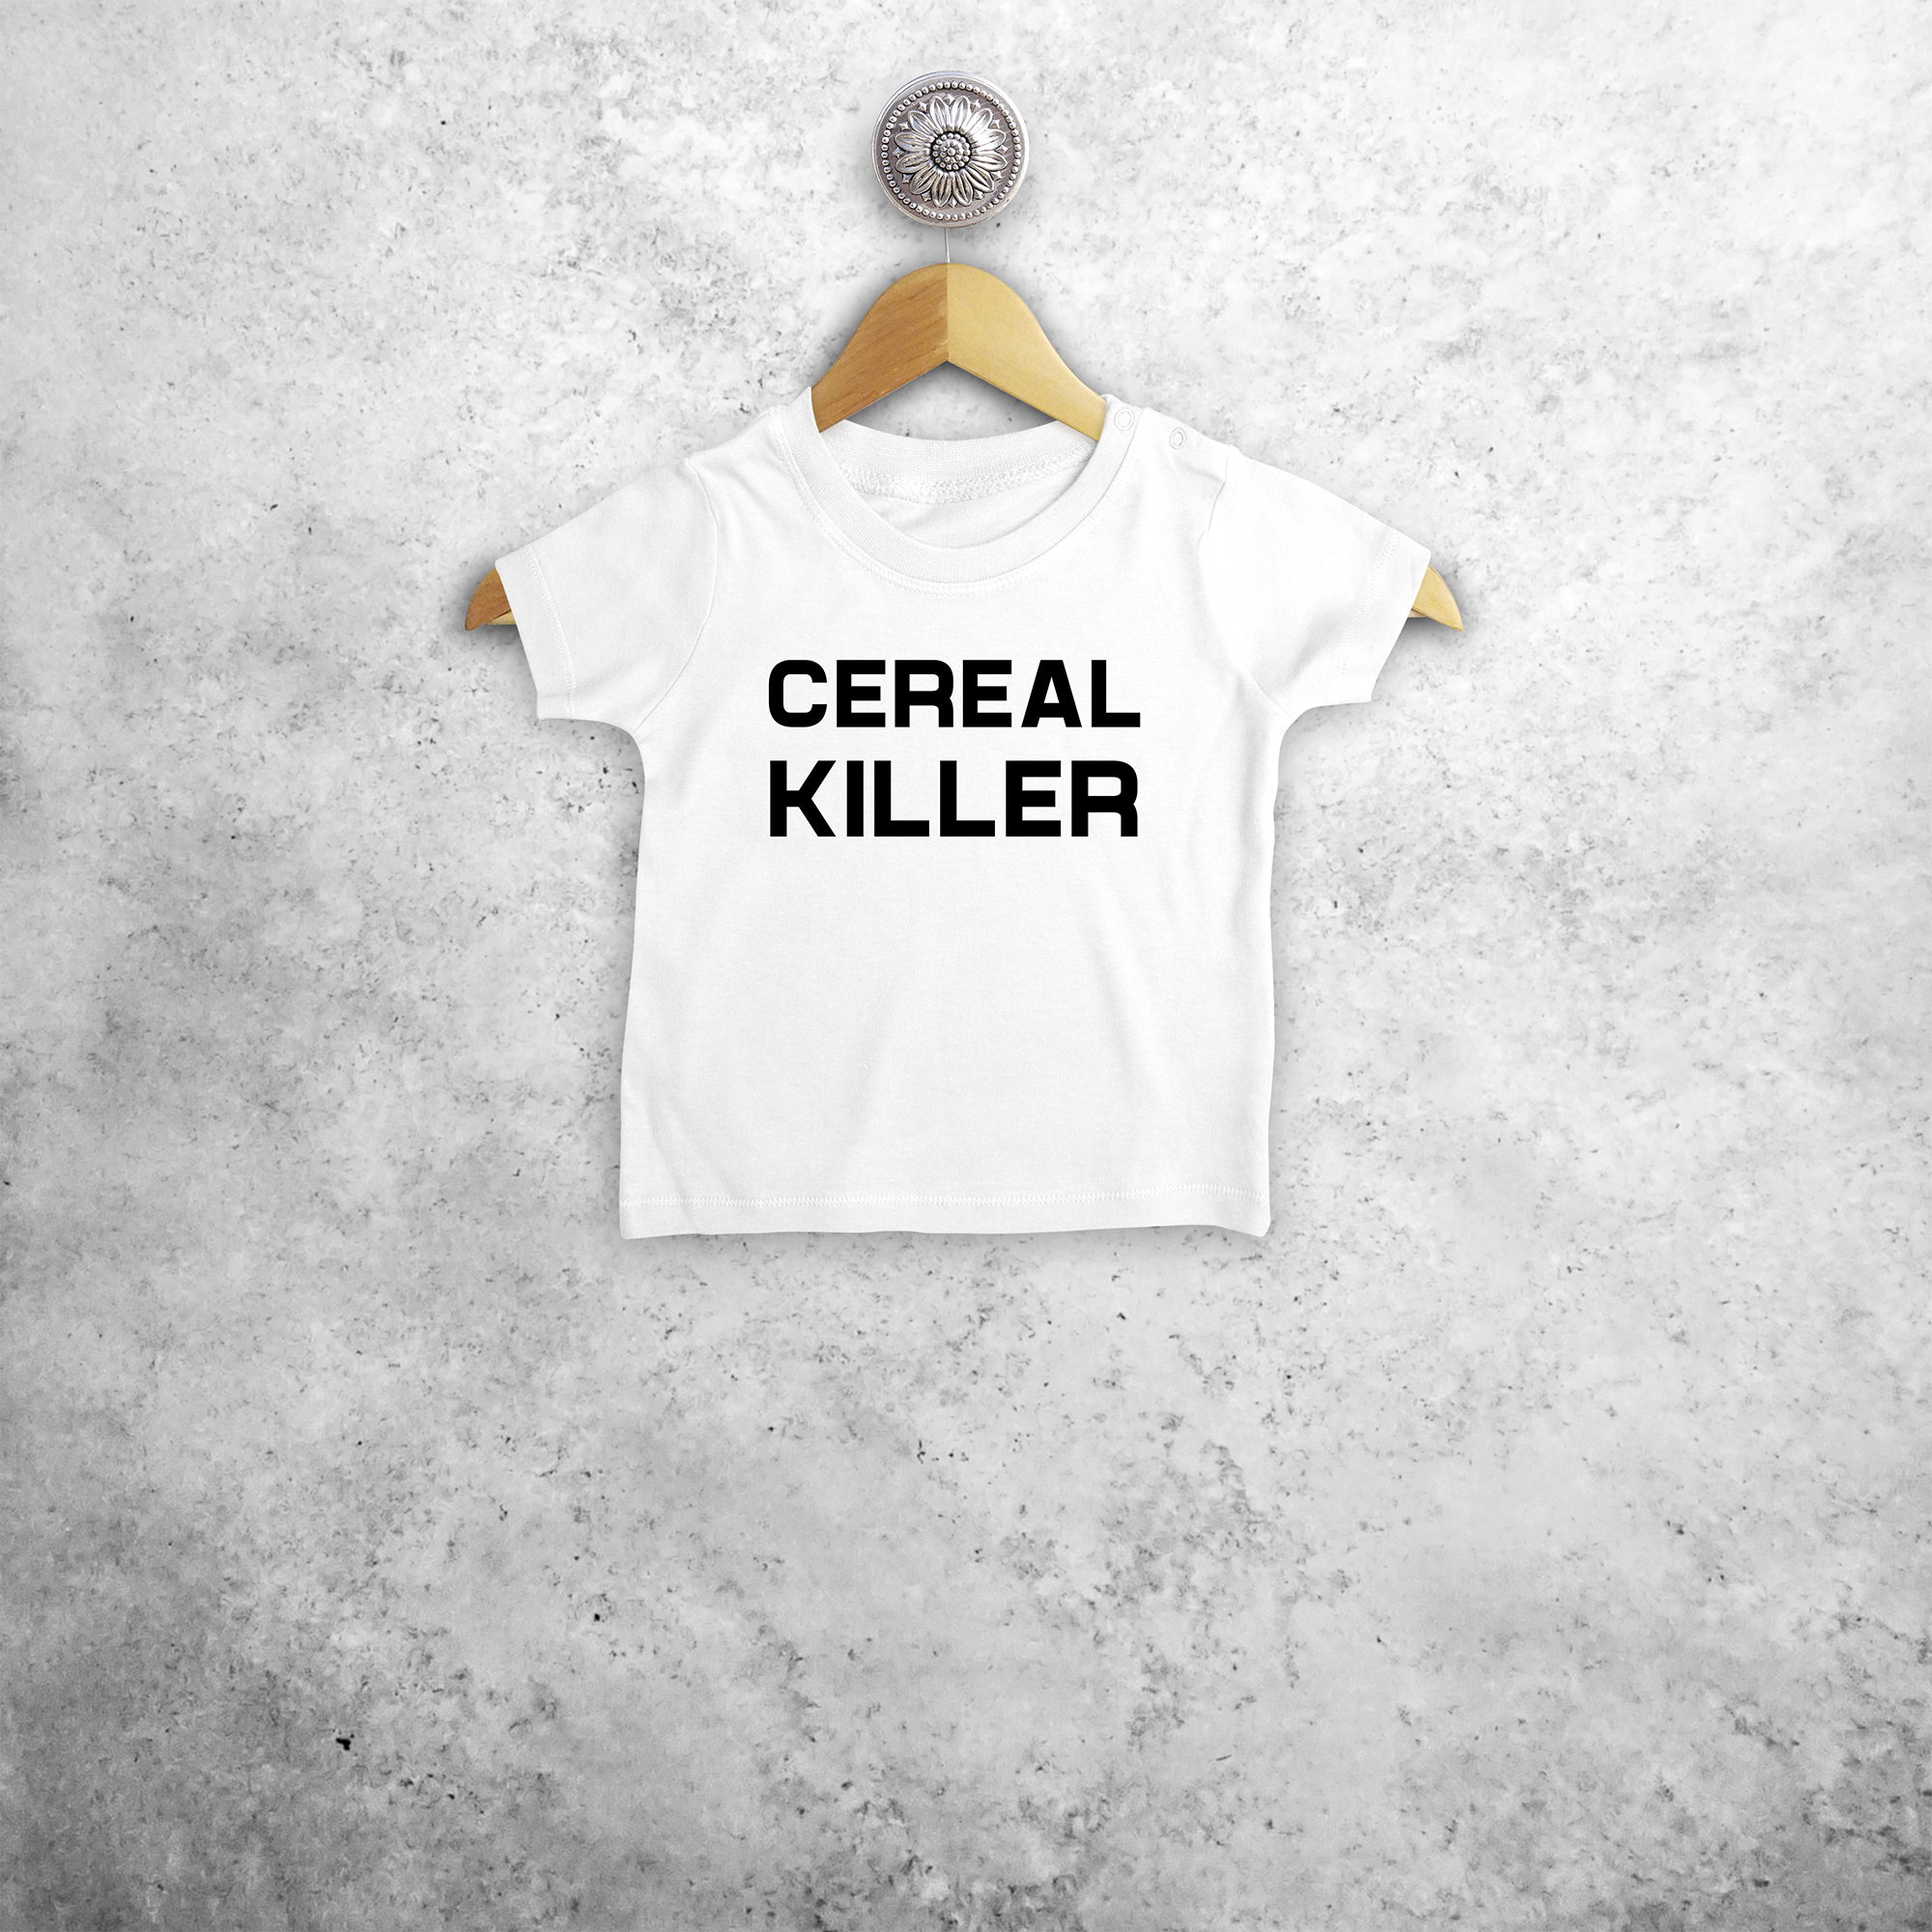 'Cereal killer' baby shortsleeve shirt